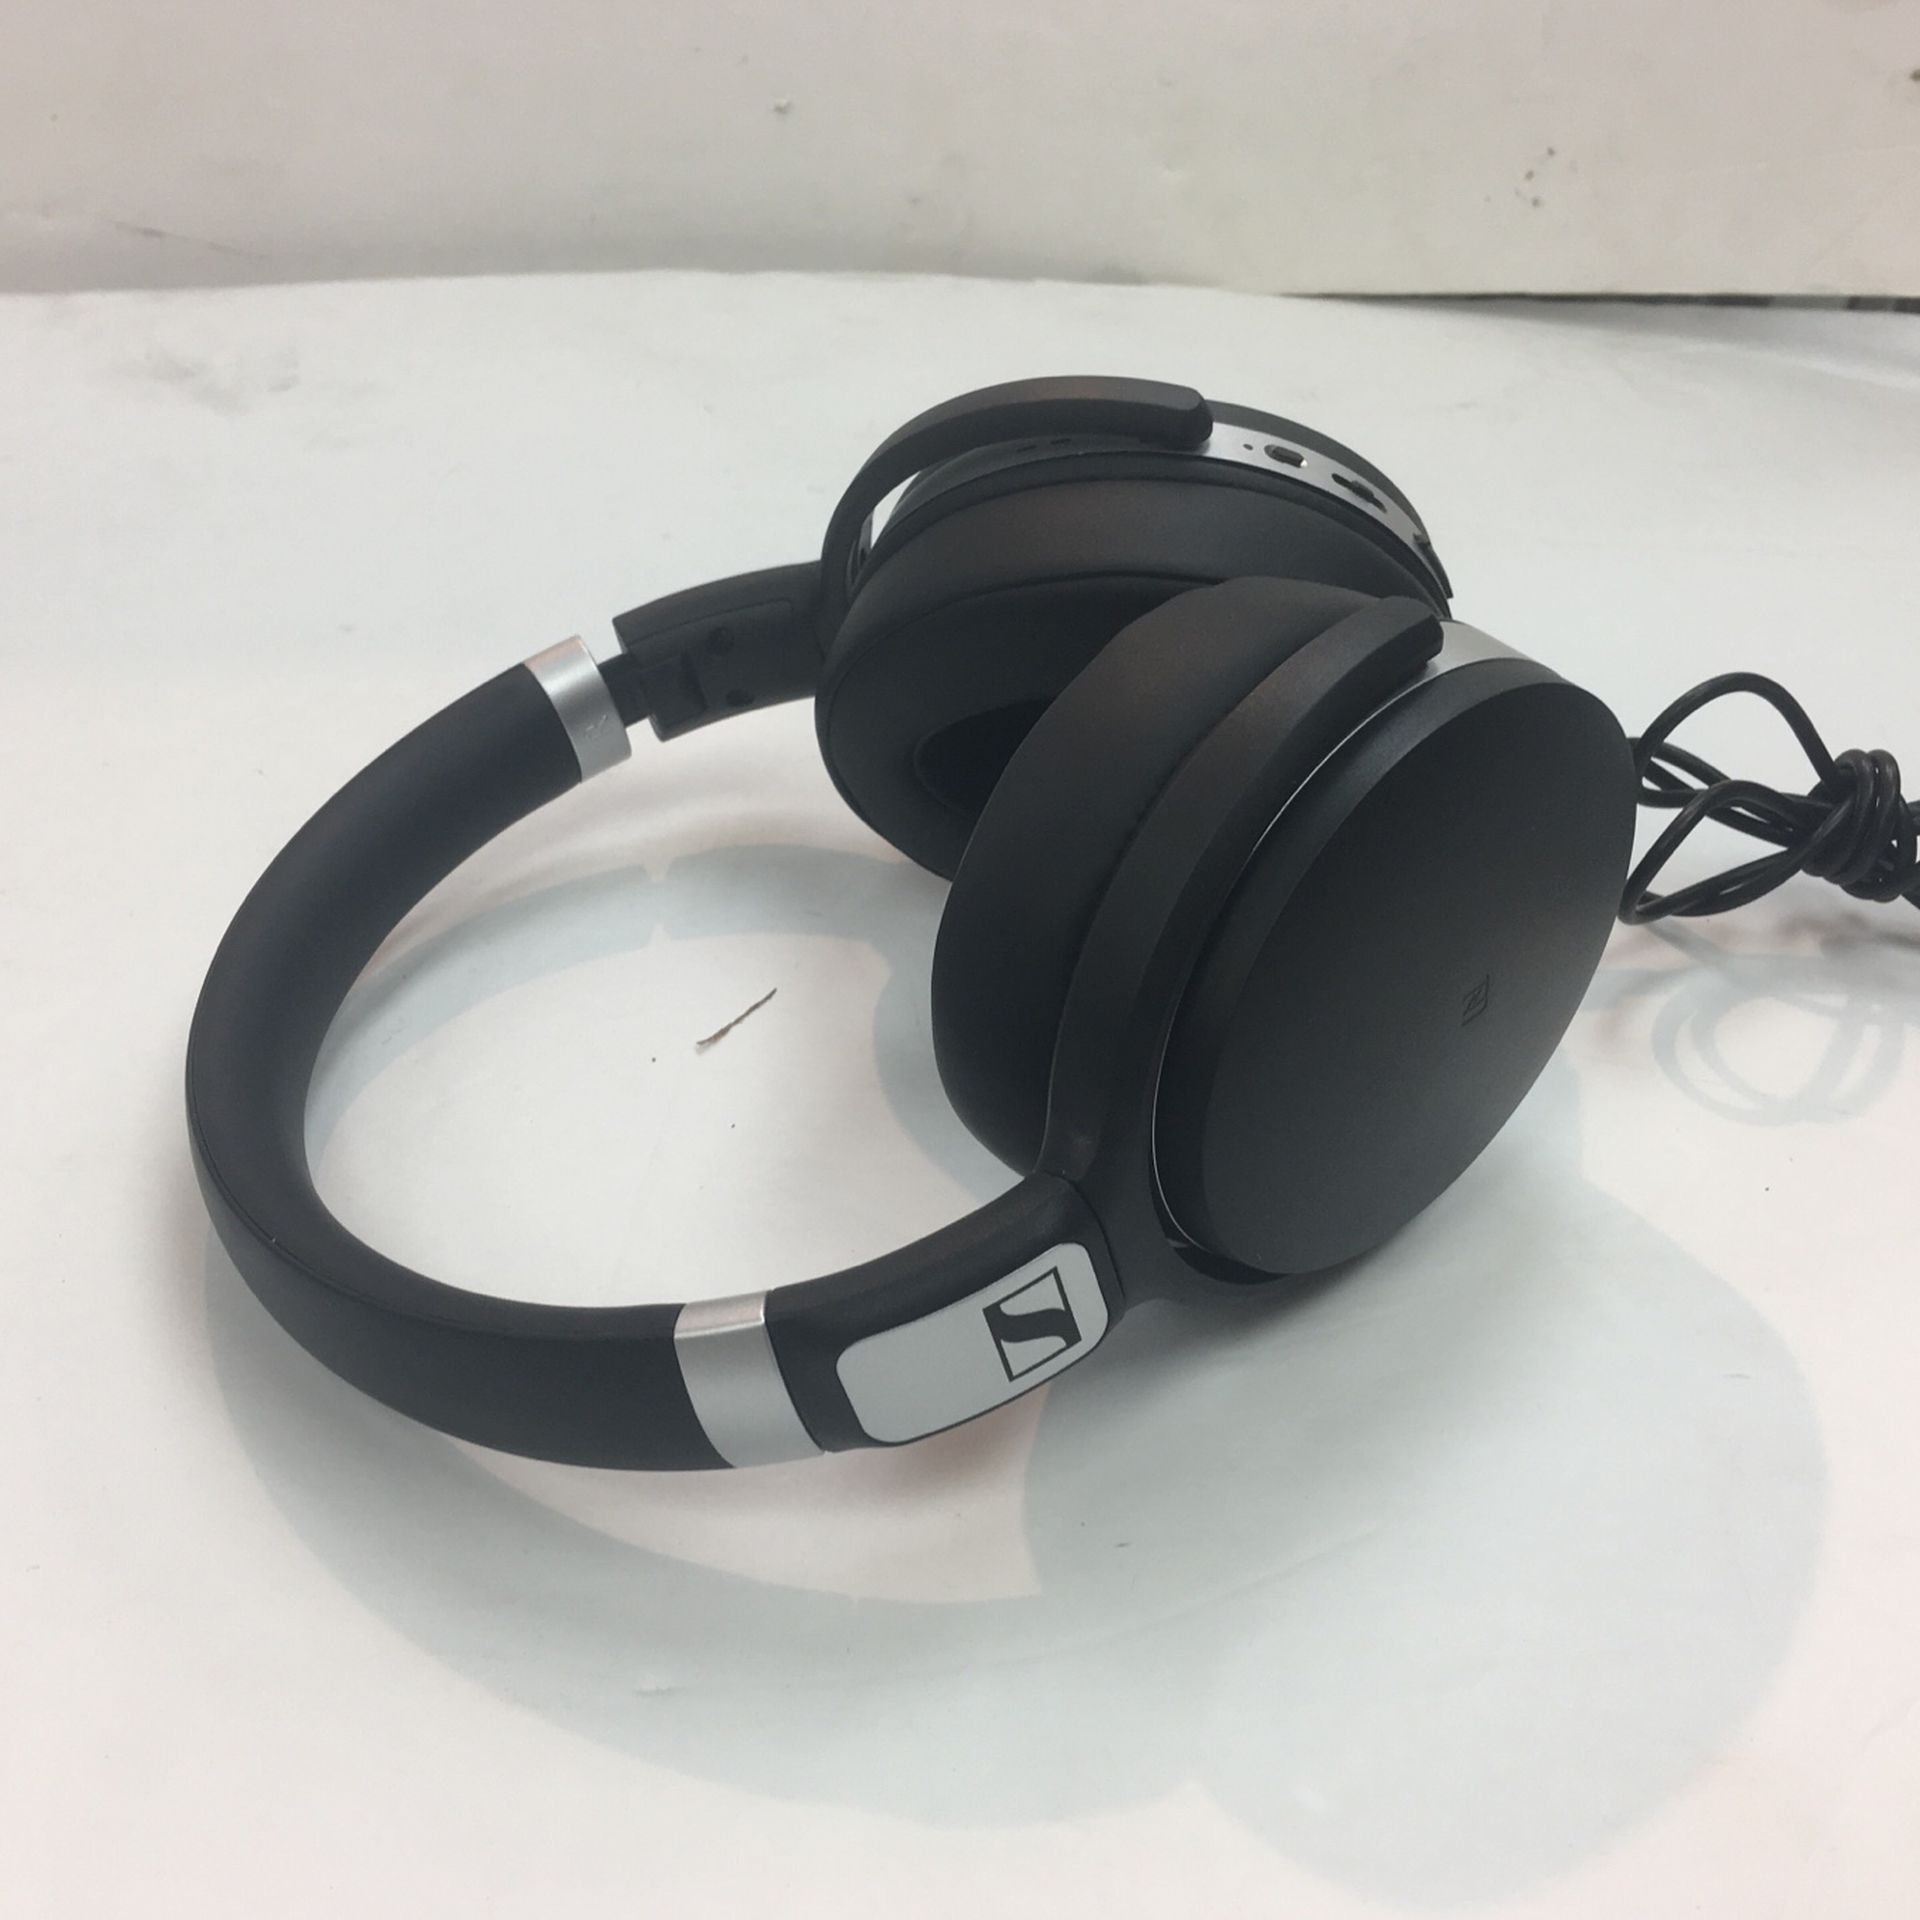 Sennheiser Hd450 Wireless Bluetooth Headset Headphones Noise Cancelling